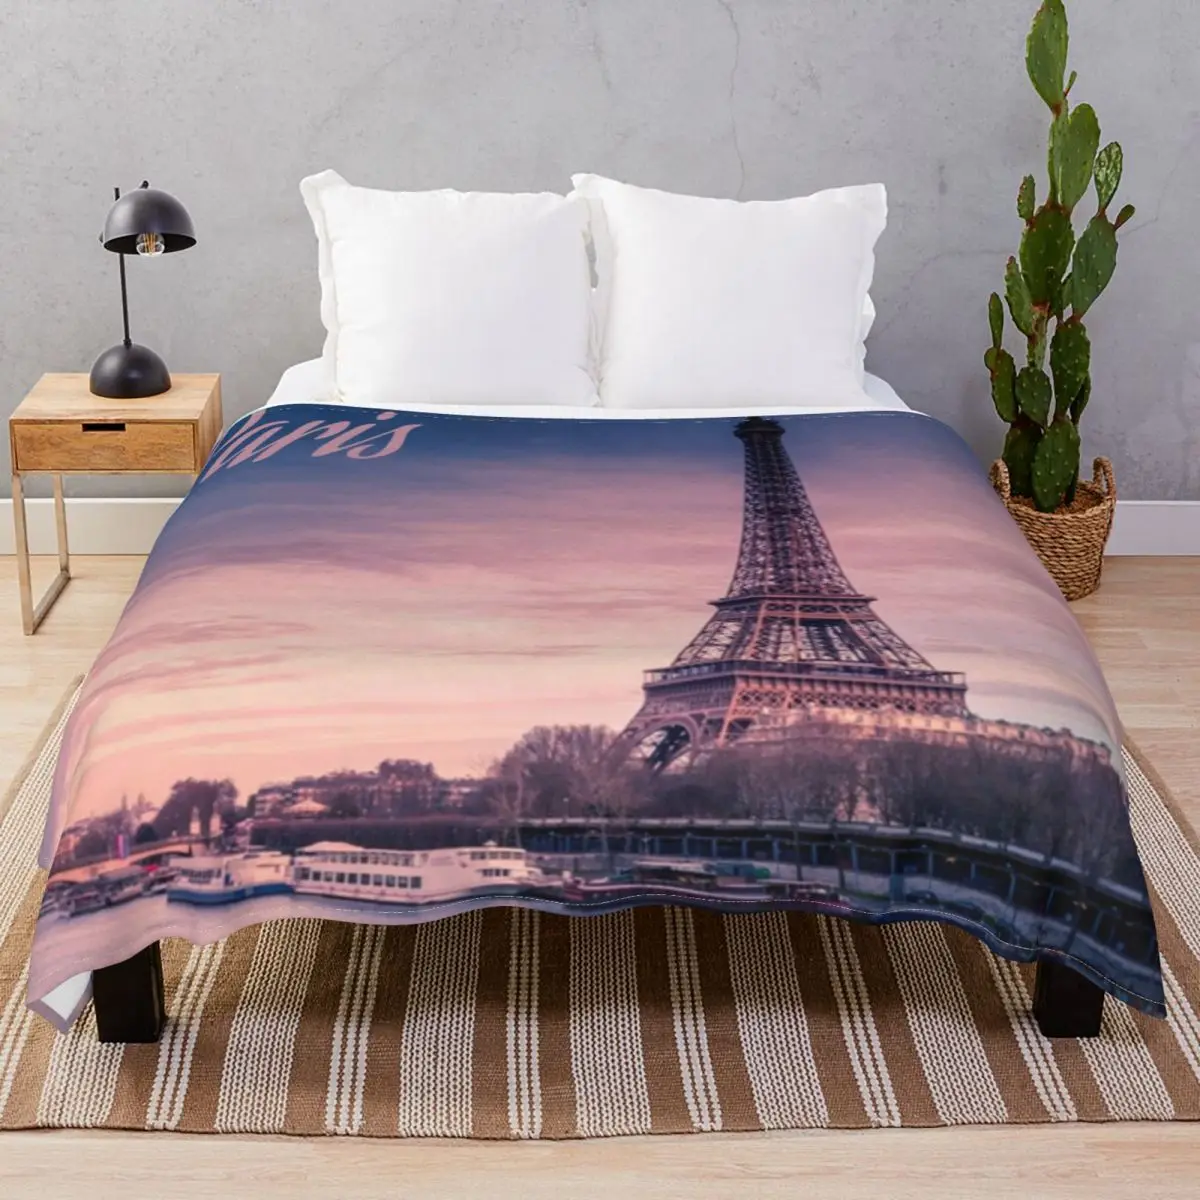 Paris France Eiffel Tower Blanket Fleece Plush Decoration Multi-function Unisex Throw Blankets for Bedding Sofa Camp Office